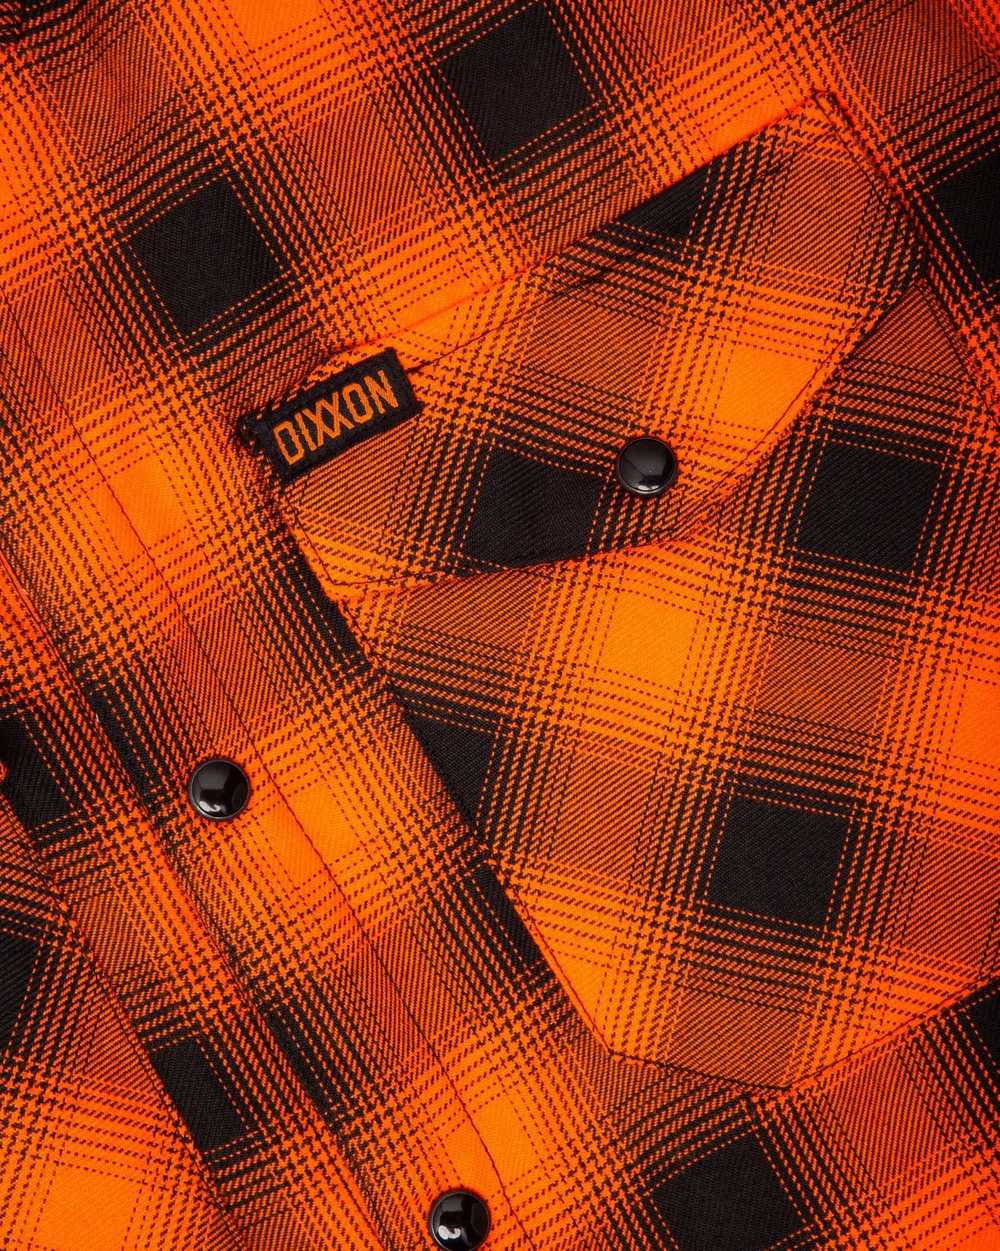 dixxon Hardhat Reversible Flannel Jacket - image 2